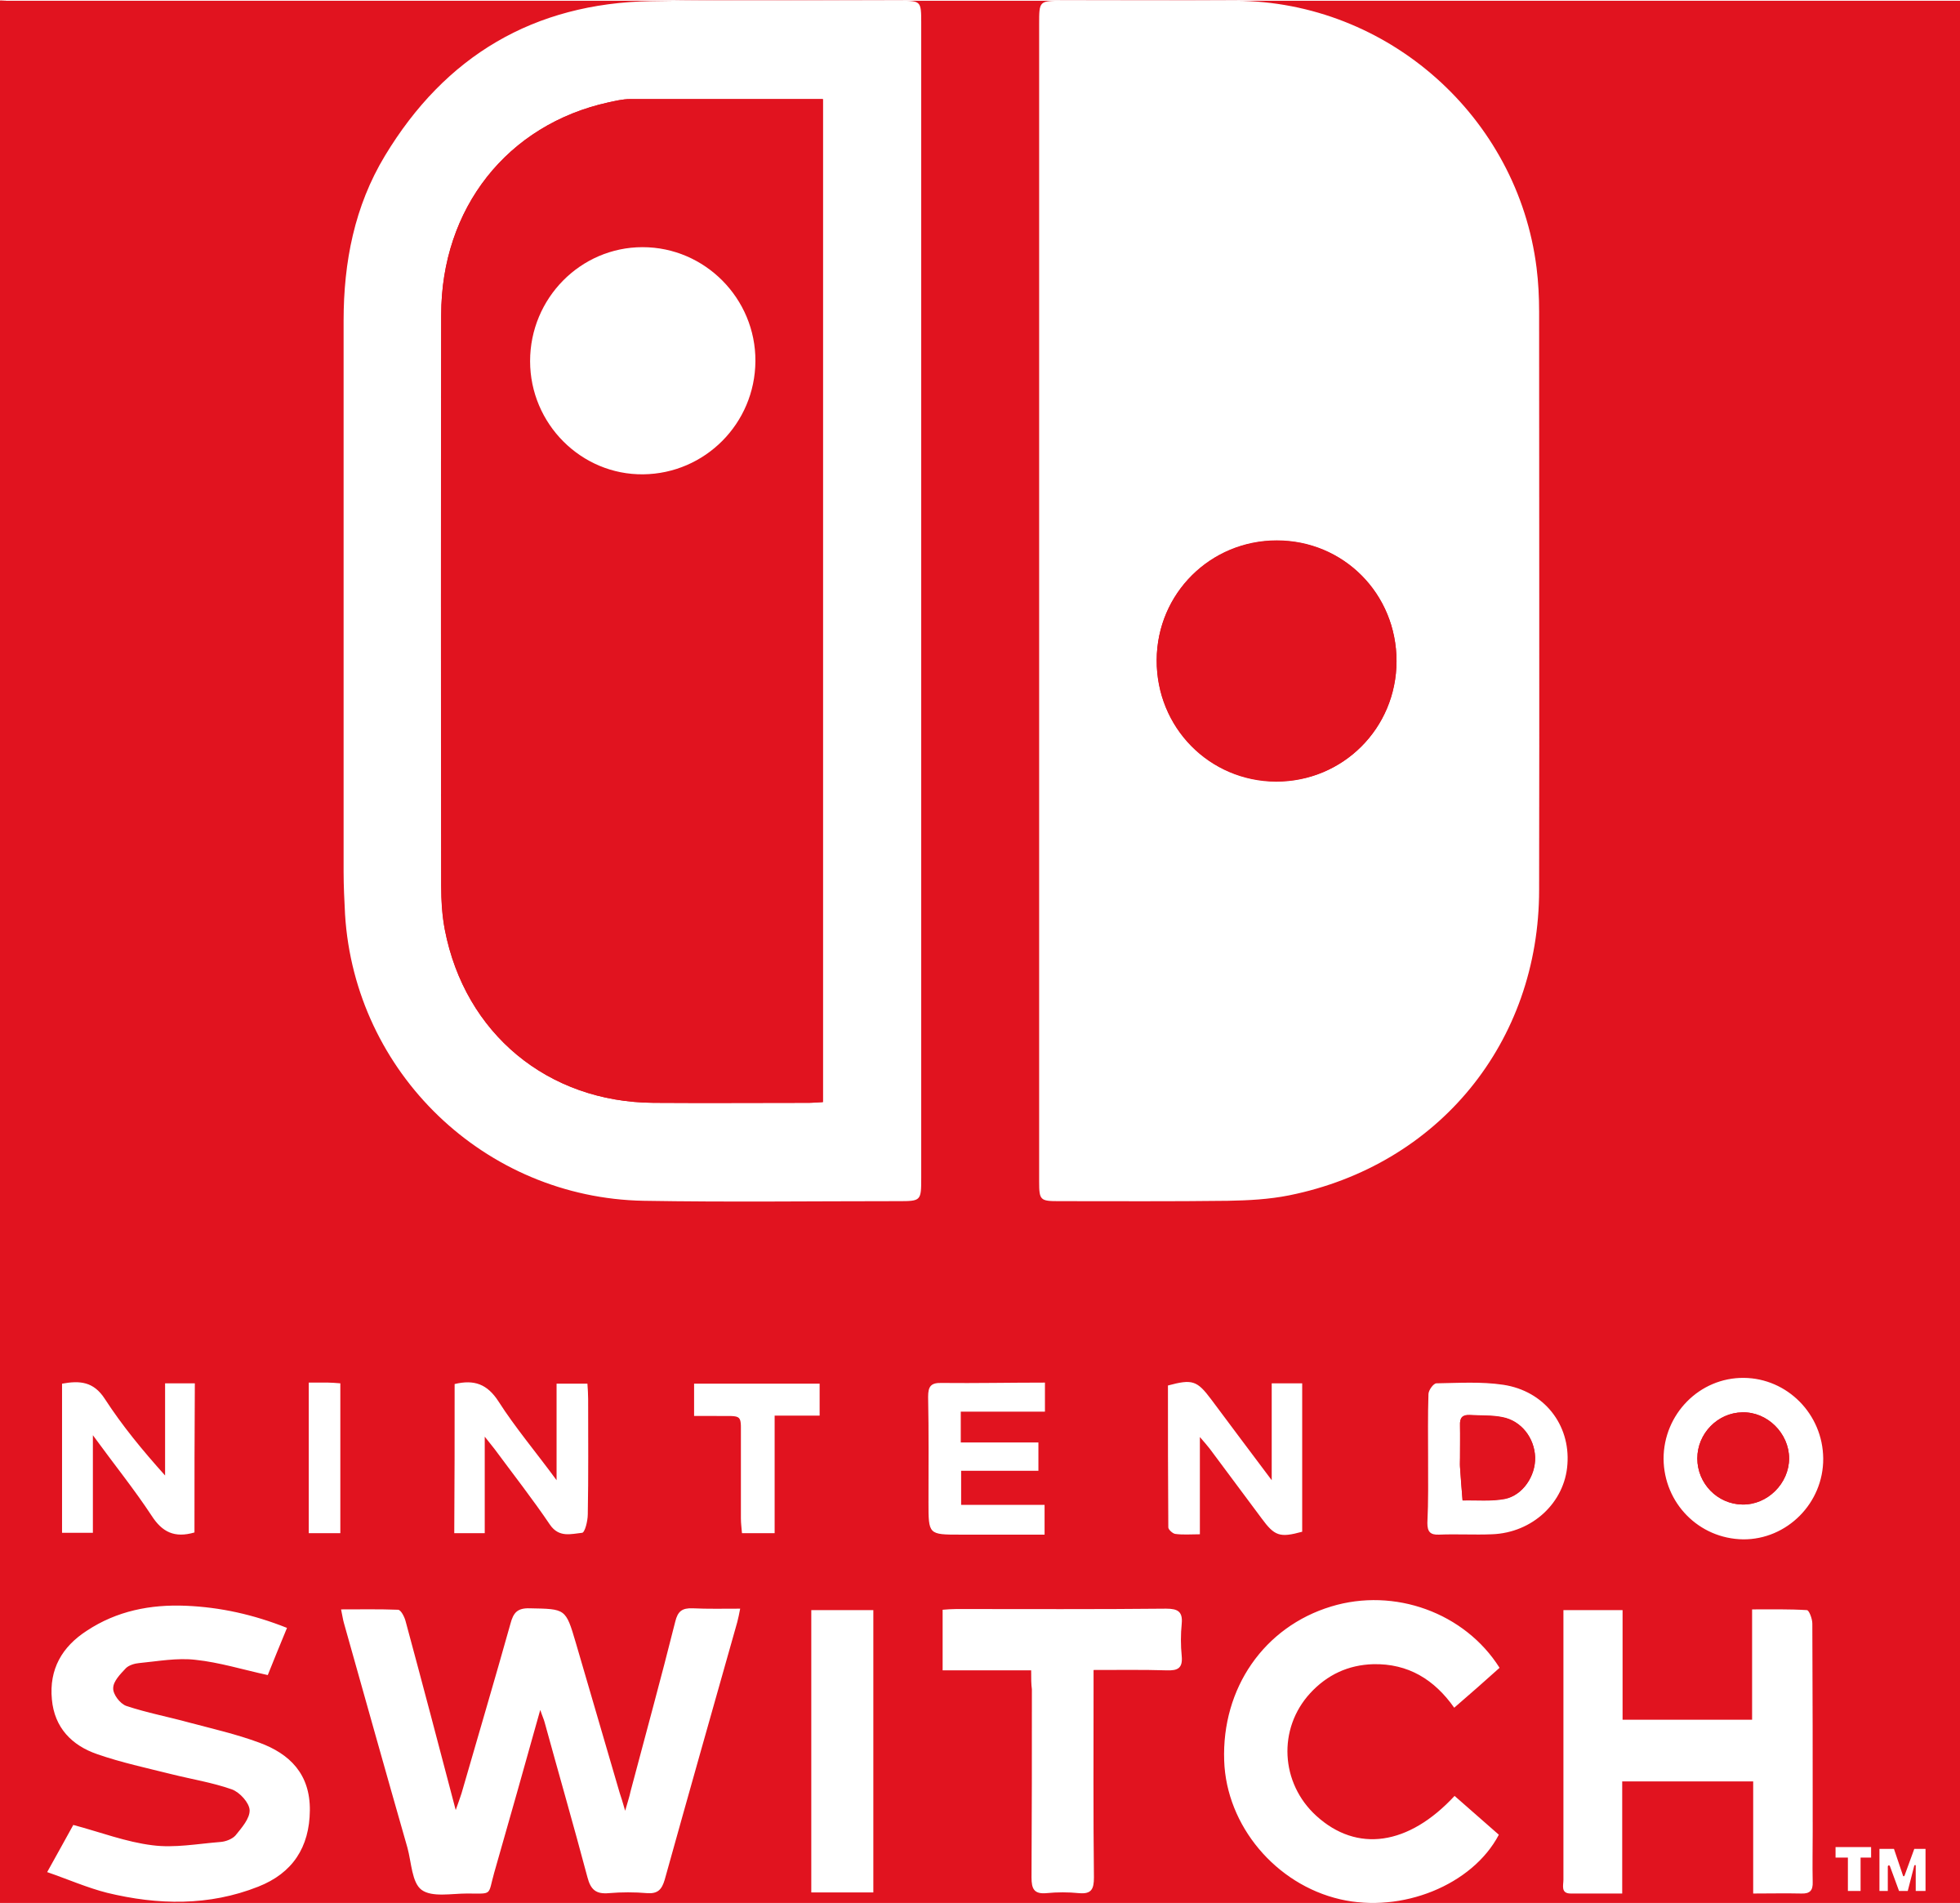 Nintendo Switch Logo - Nintendo Switch Logo PNG Transparent & SVG Vector - Freebie Supply